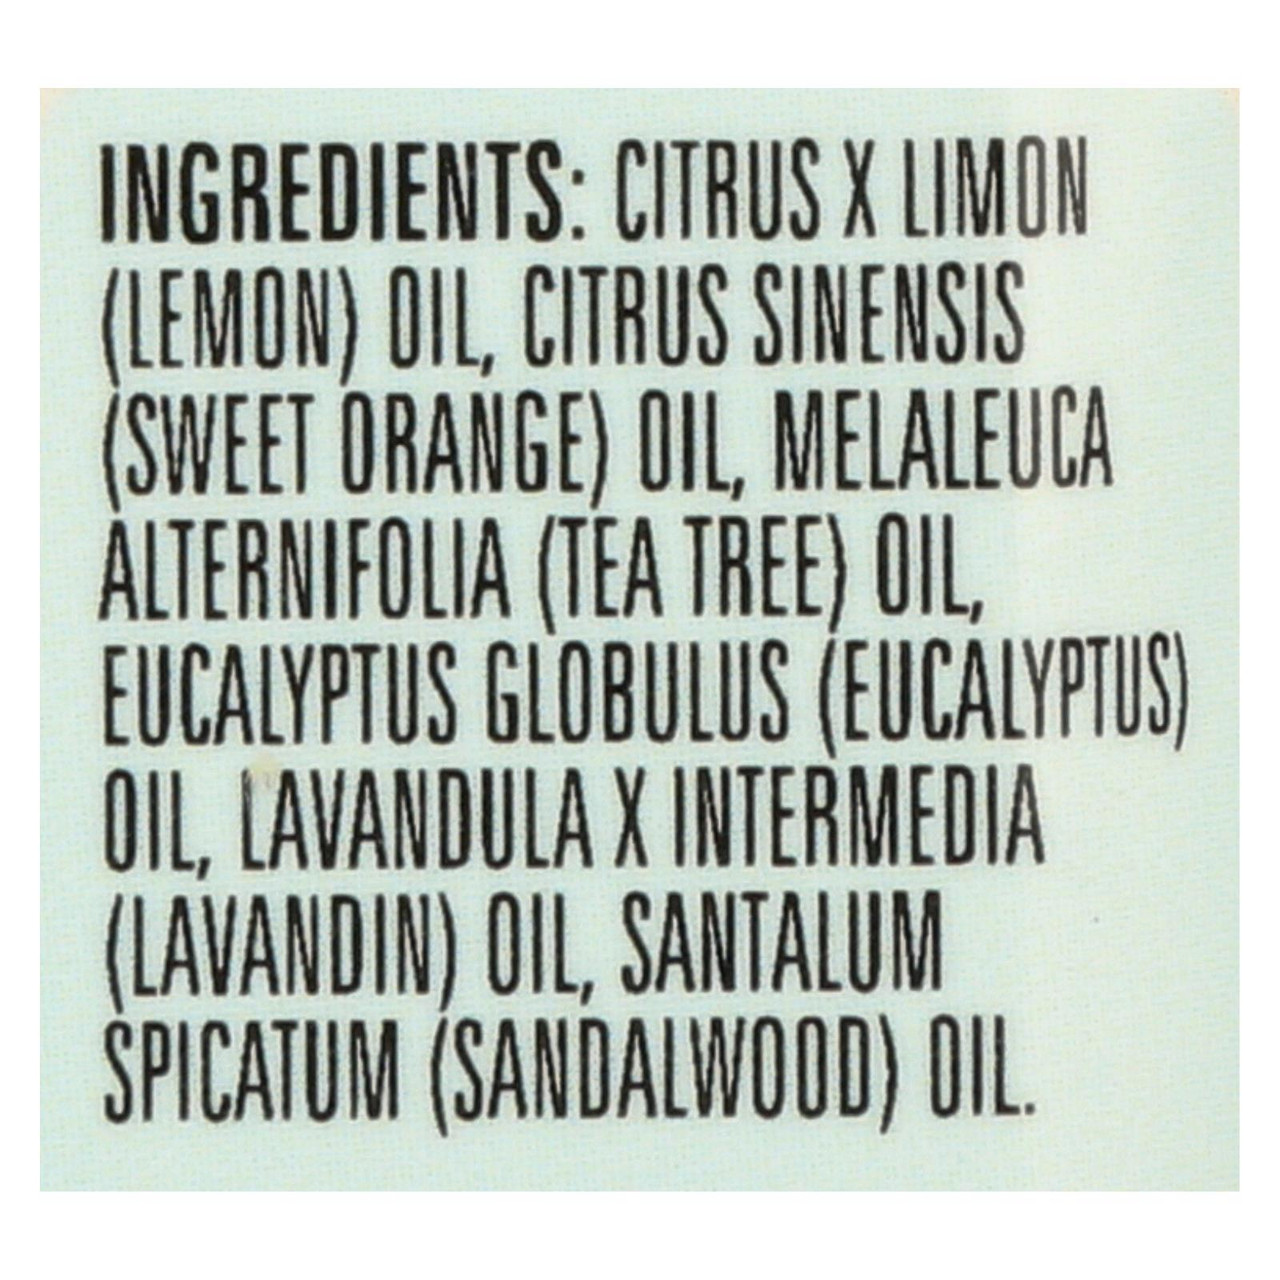 Aura Cacia 100% Pure Essential Oil, Cypress, 0.5 fl oz (15 ml) 